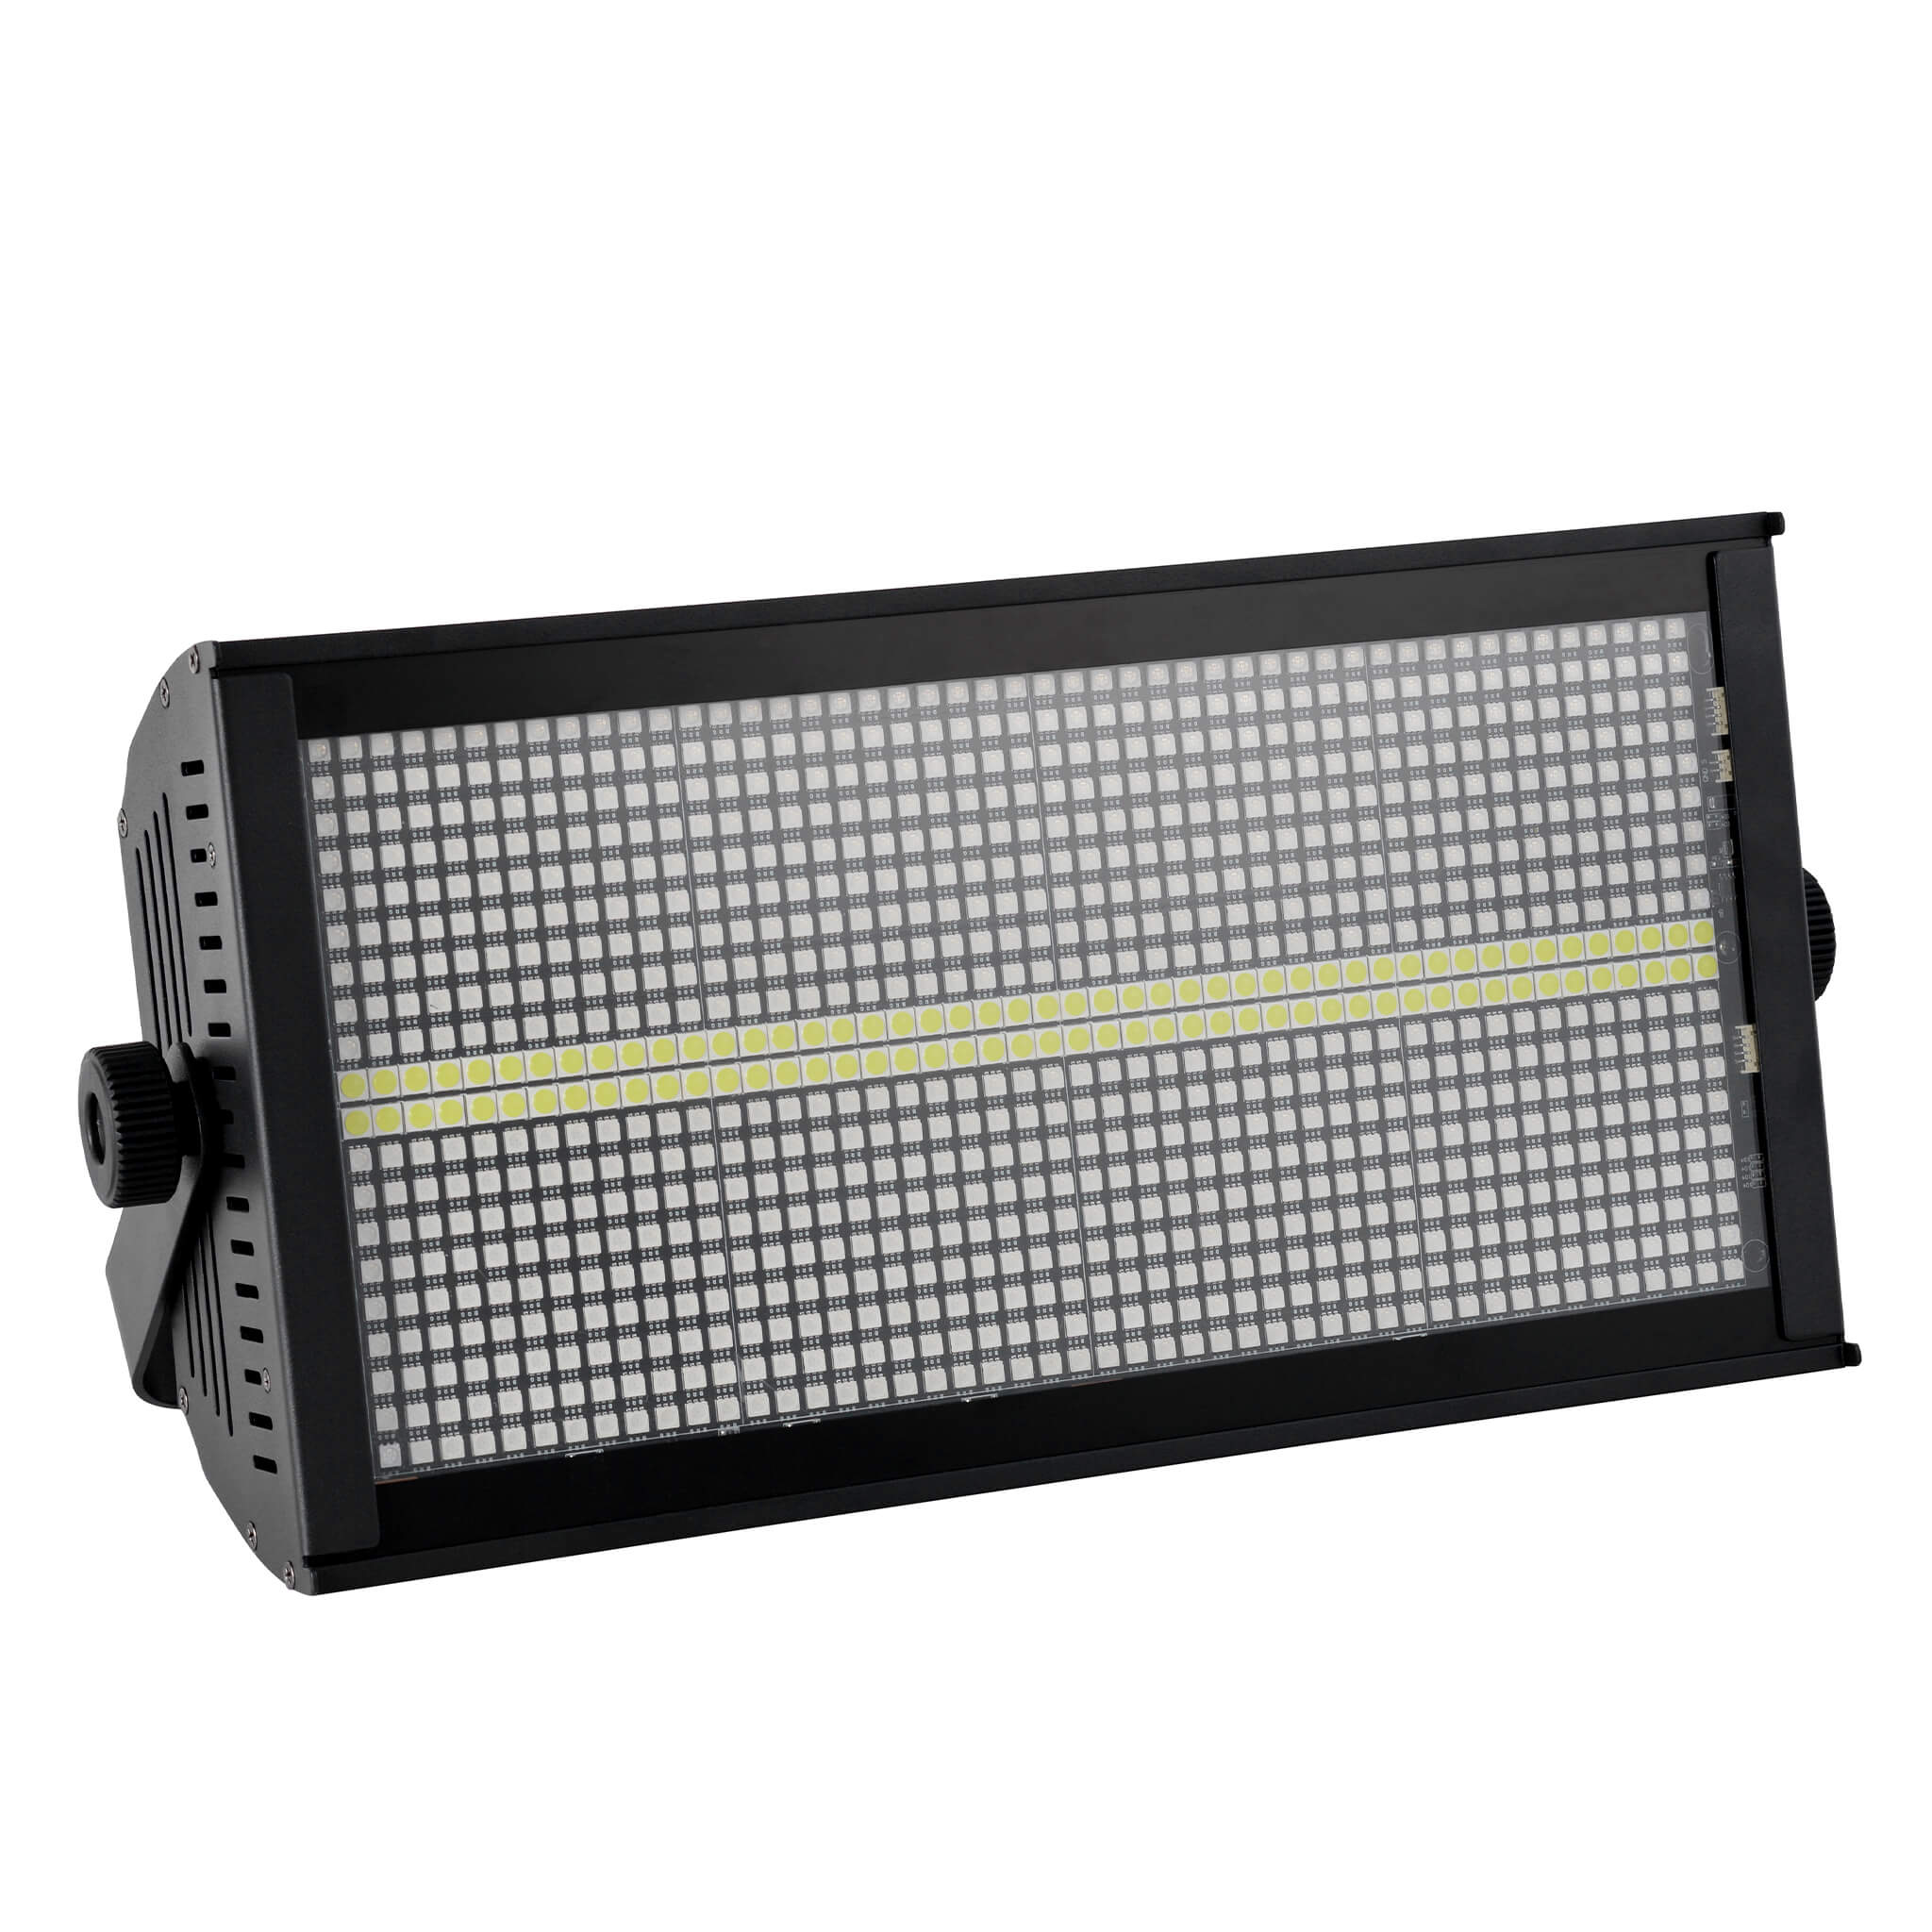 LED 280W RGB Marquee Strobe Light (8 Segments) Stage Light